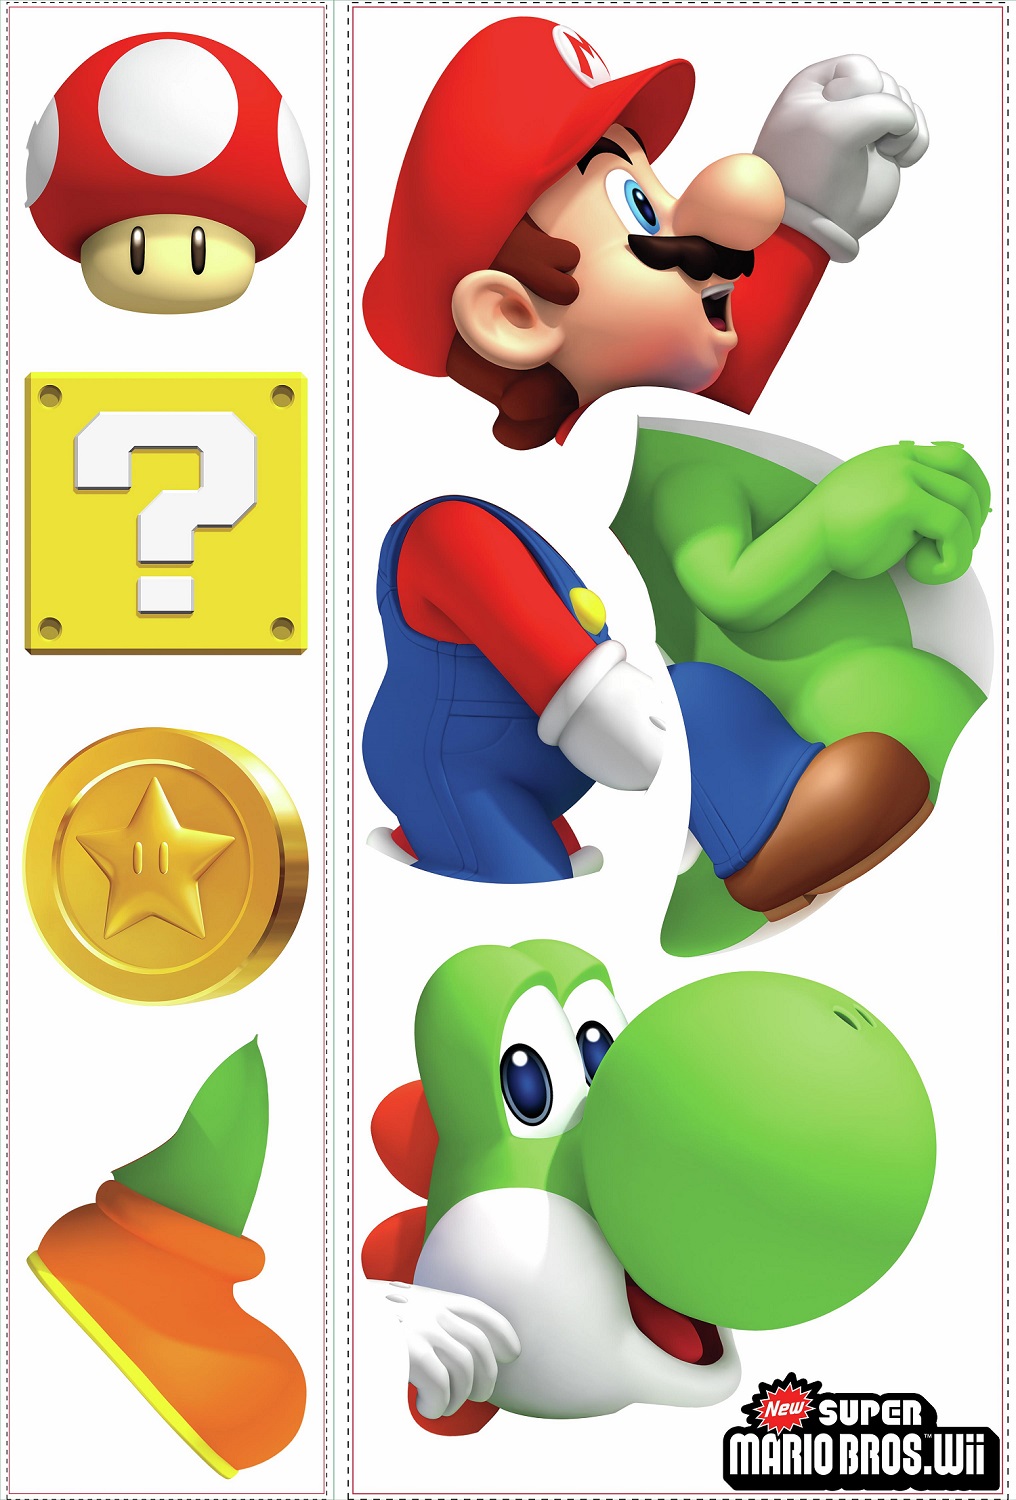 Nintendo Super Mario Bros med og Mario Wallstickers Kr. 299 - på lager til omgående levering